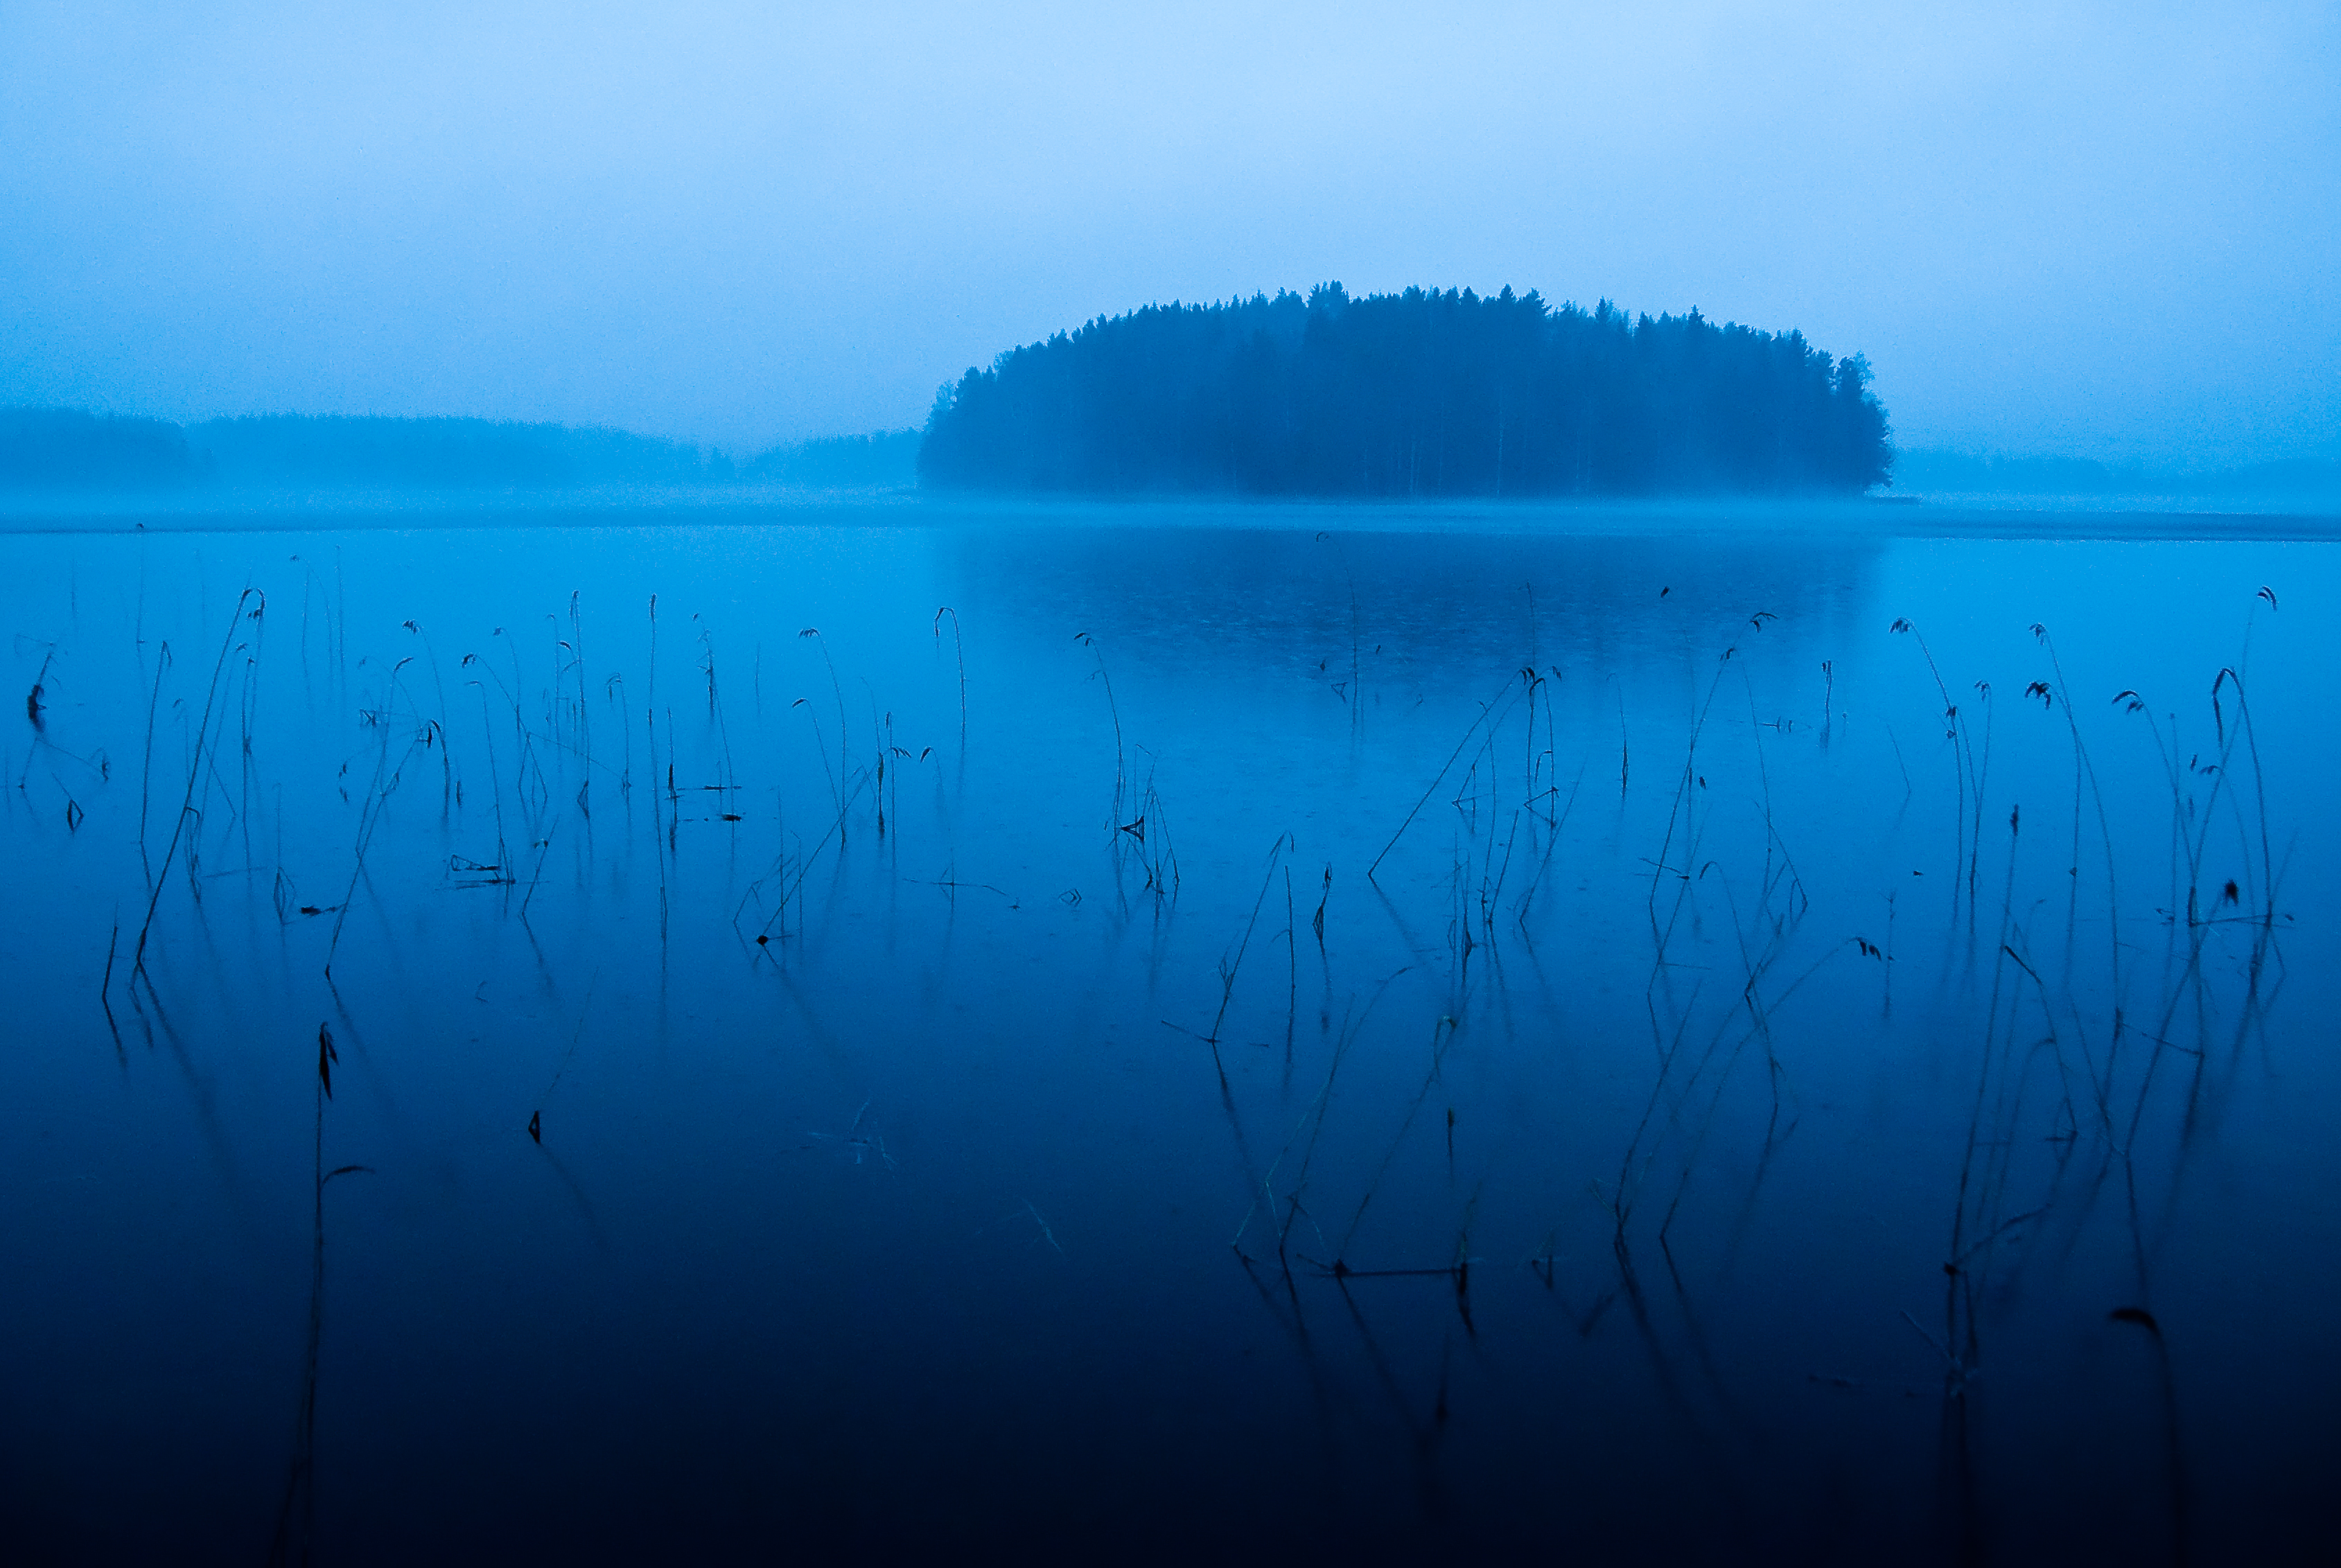 Wallpaper, mist, lake, ice, water, rain, fog, night, Finland, island, spring, handheld, noisy, thaw, explored, eccie 3378x2263